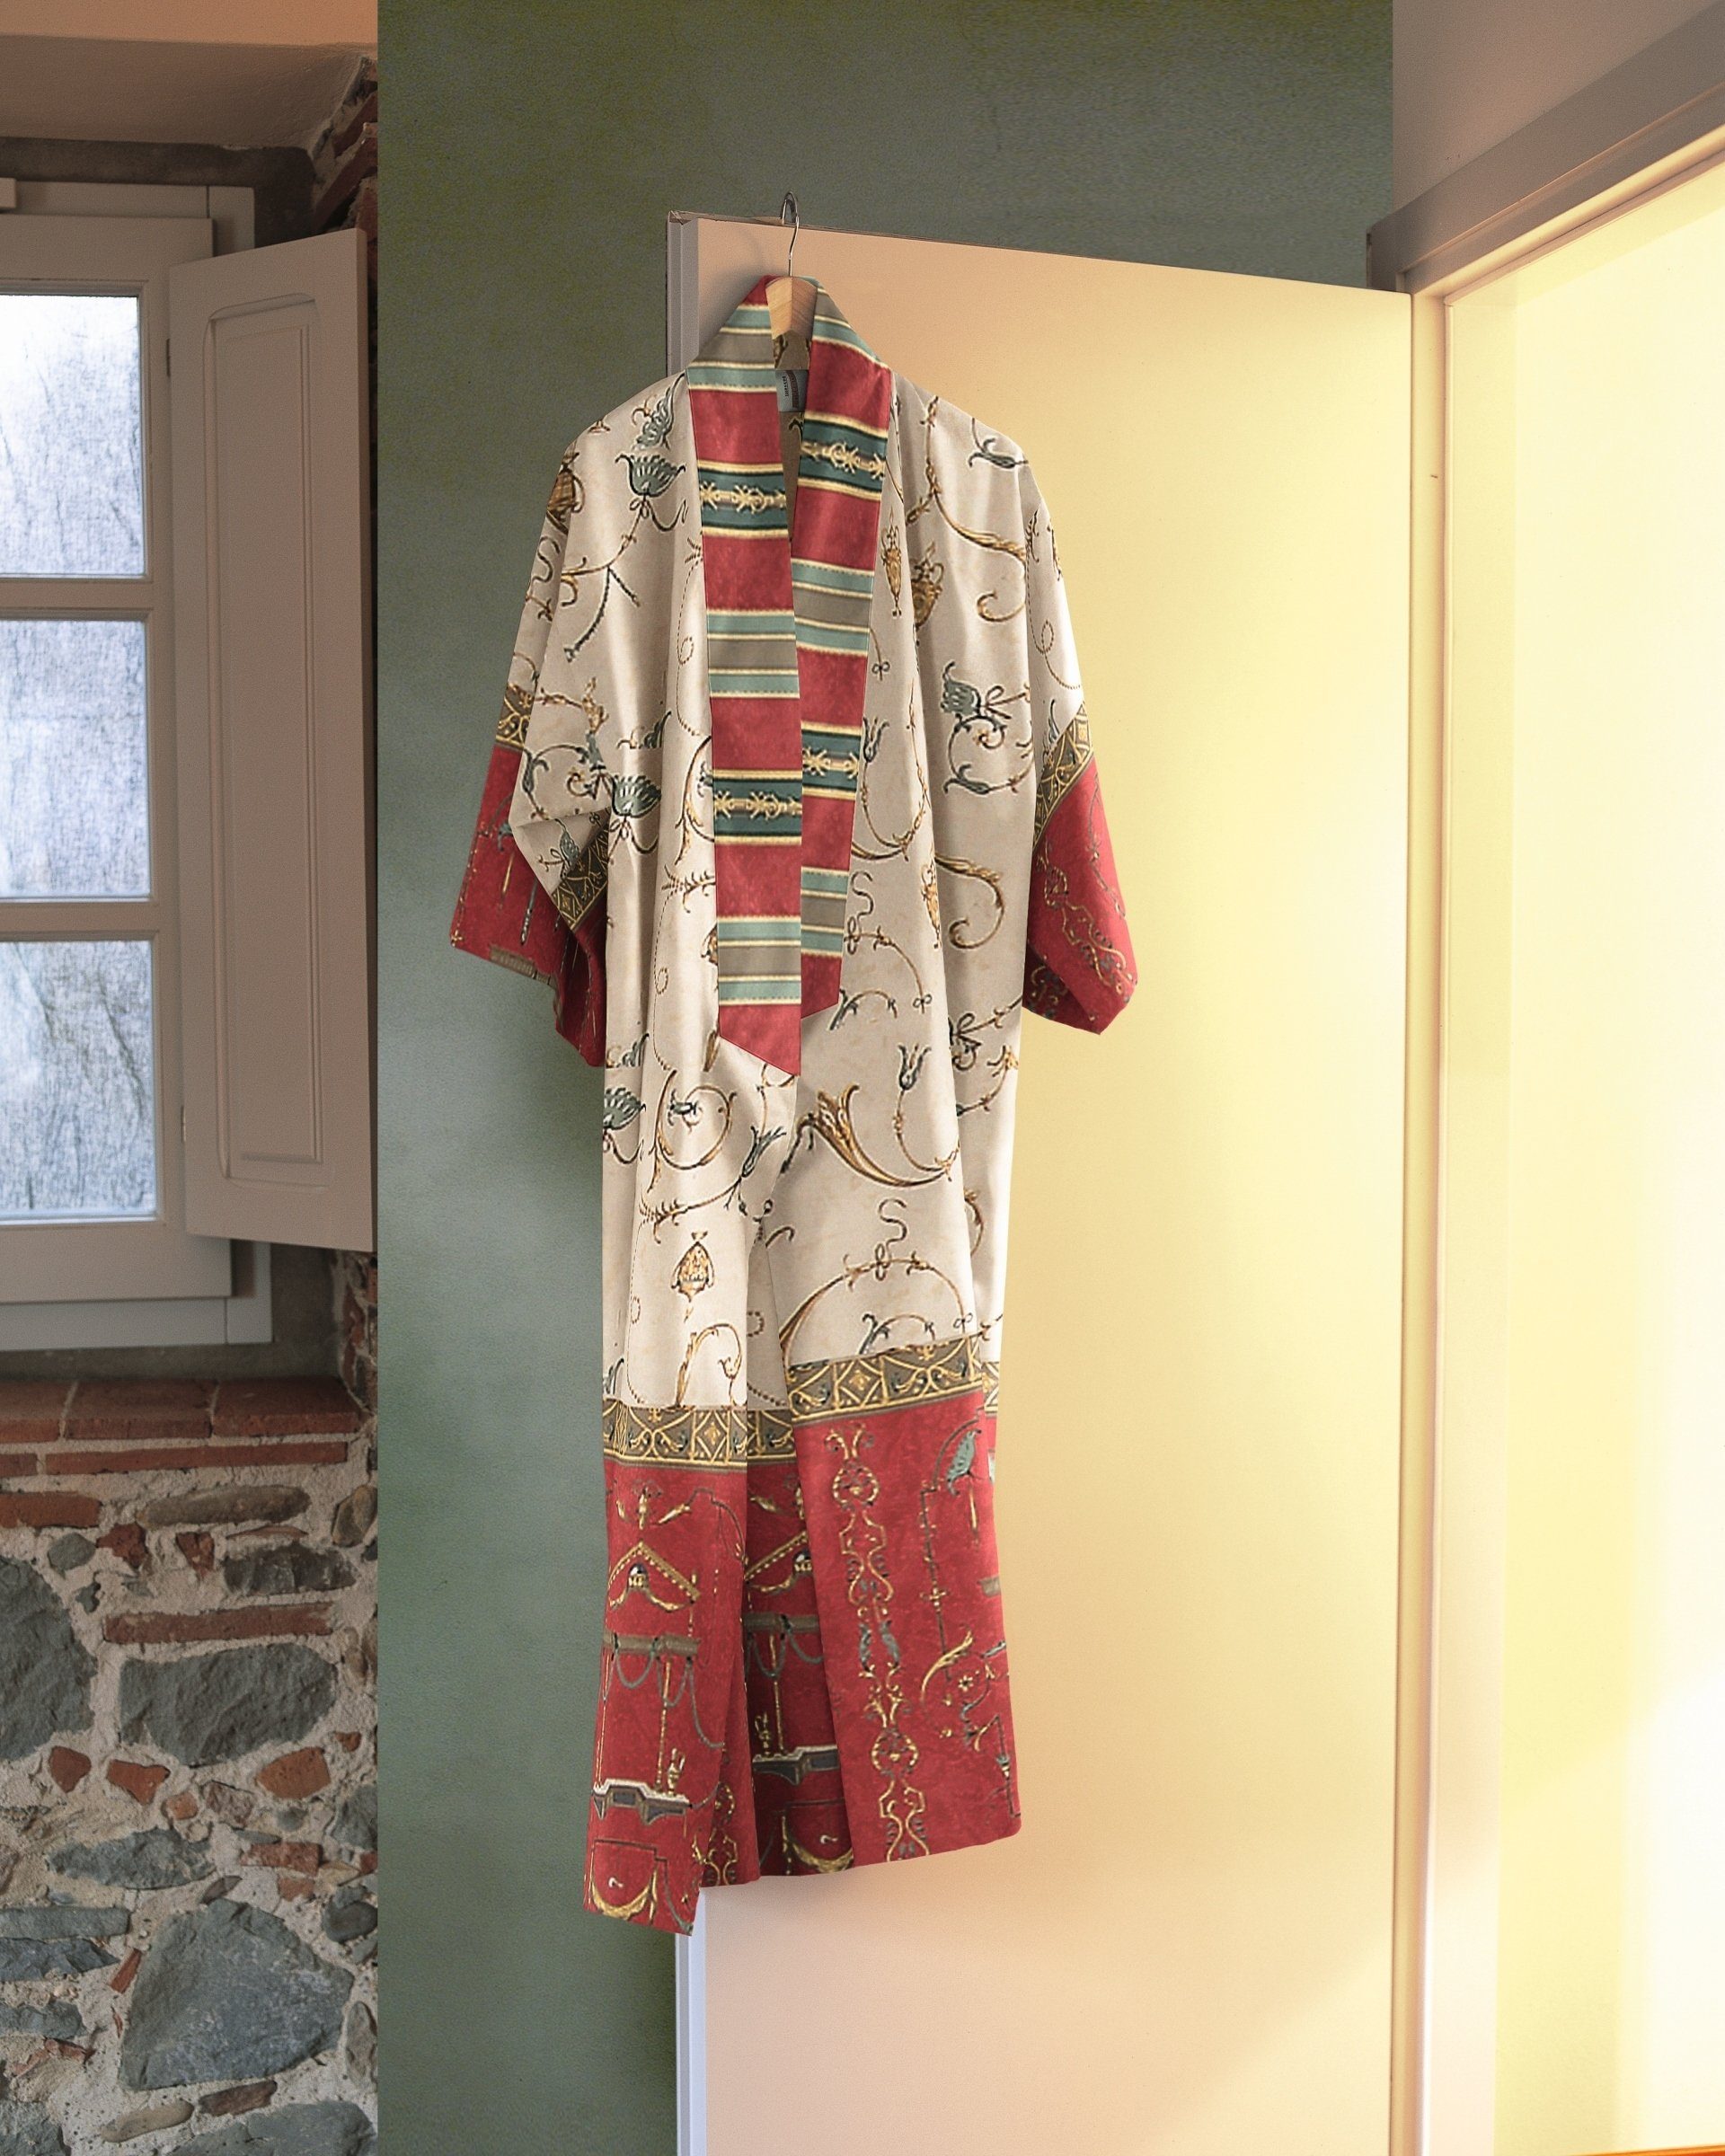 Baumwolle Bassetti aus Kimono satinierter knöchelfrei, Gürtel, OPLONTIS, rot Baumwolle,